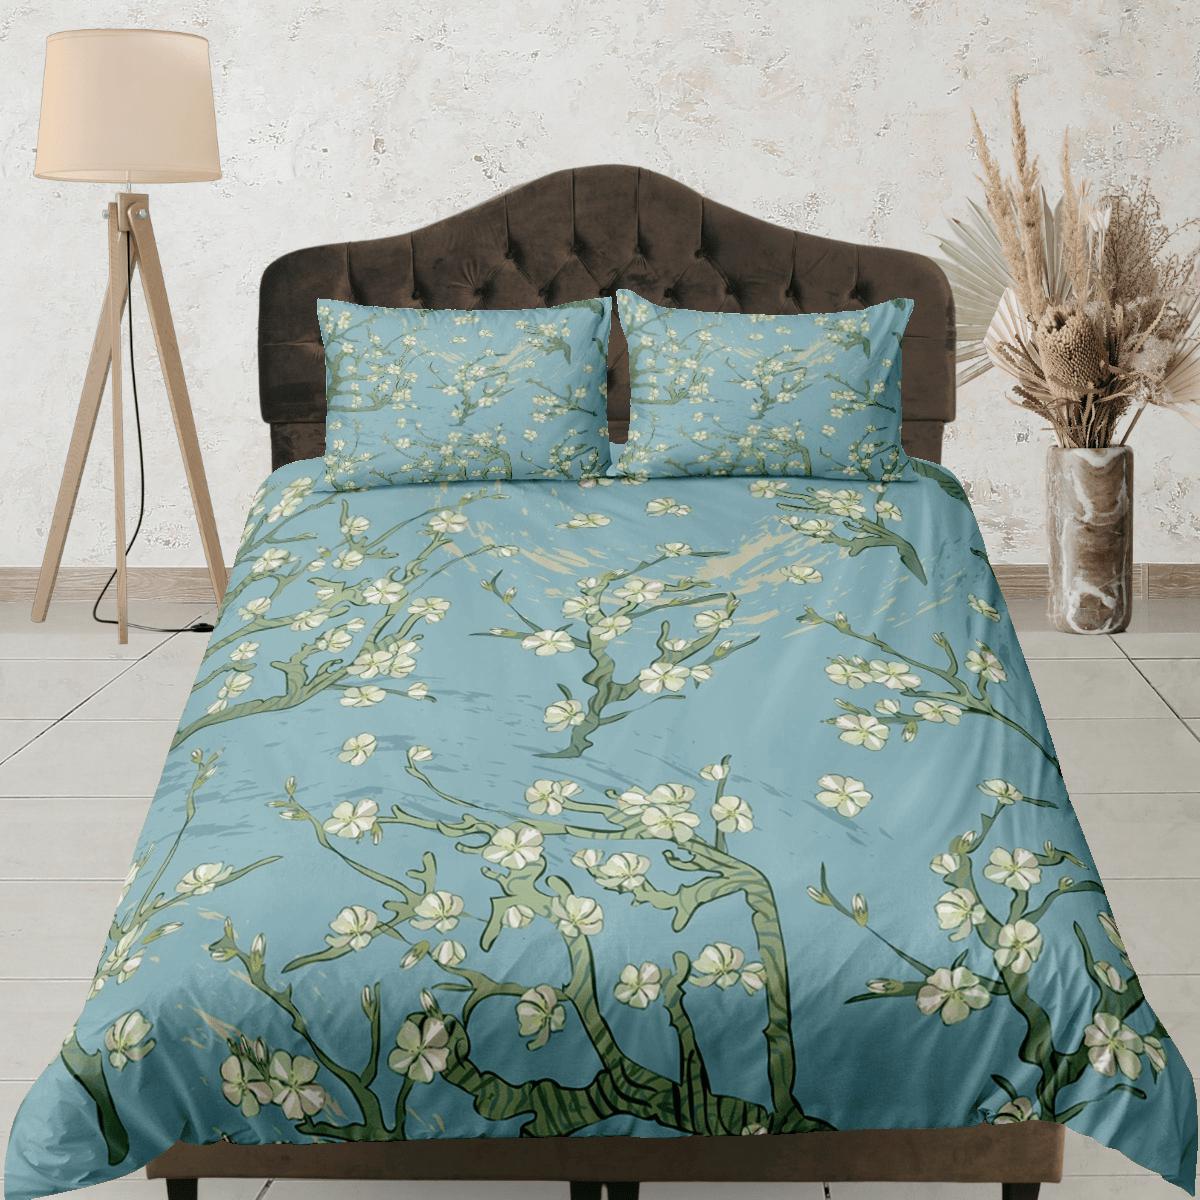 daintyduvet Moss green bedding cherry blossom printed duvet cover queen, king, boho bedding designer bedspread maximalist full size bedding aesthetic